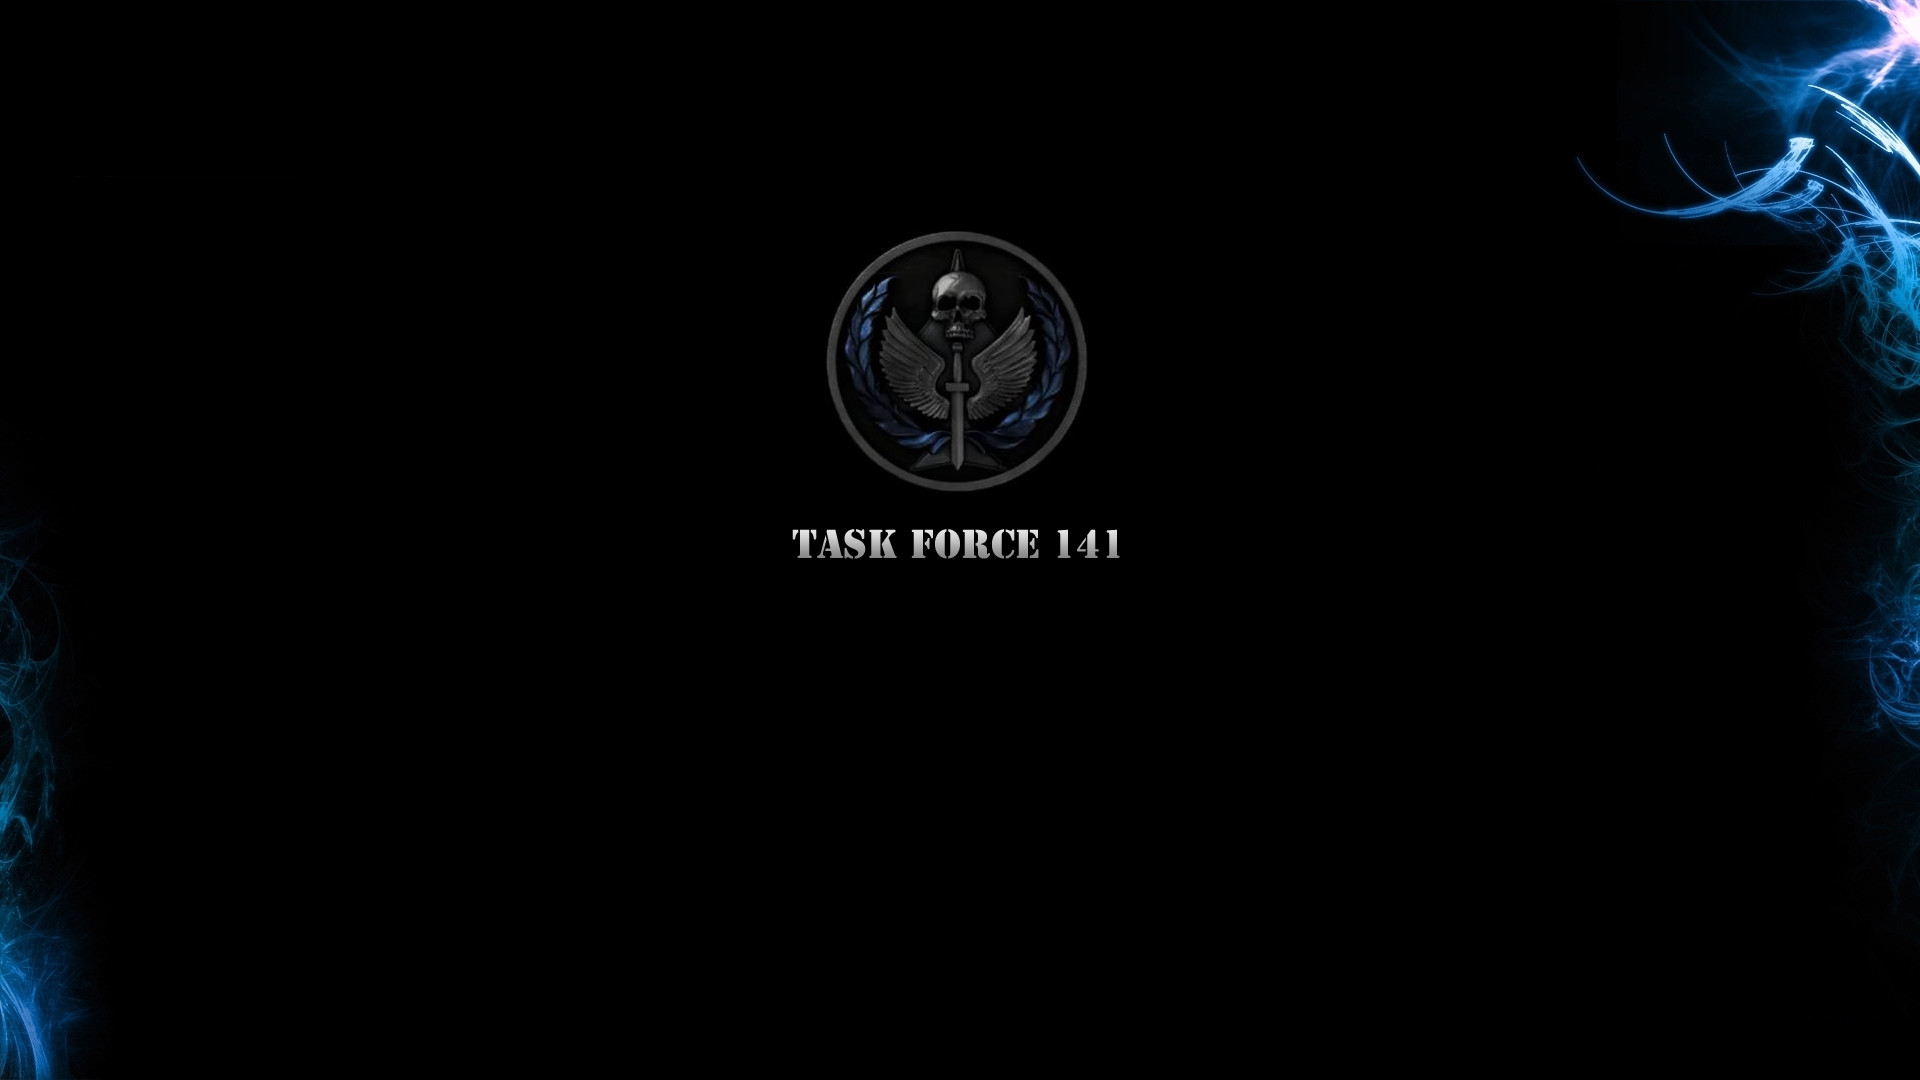 1920x1080 ... Task Force 141 rotating emblem by g3xter